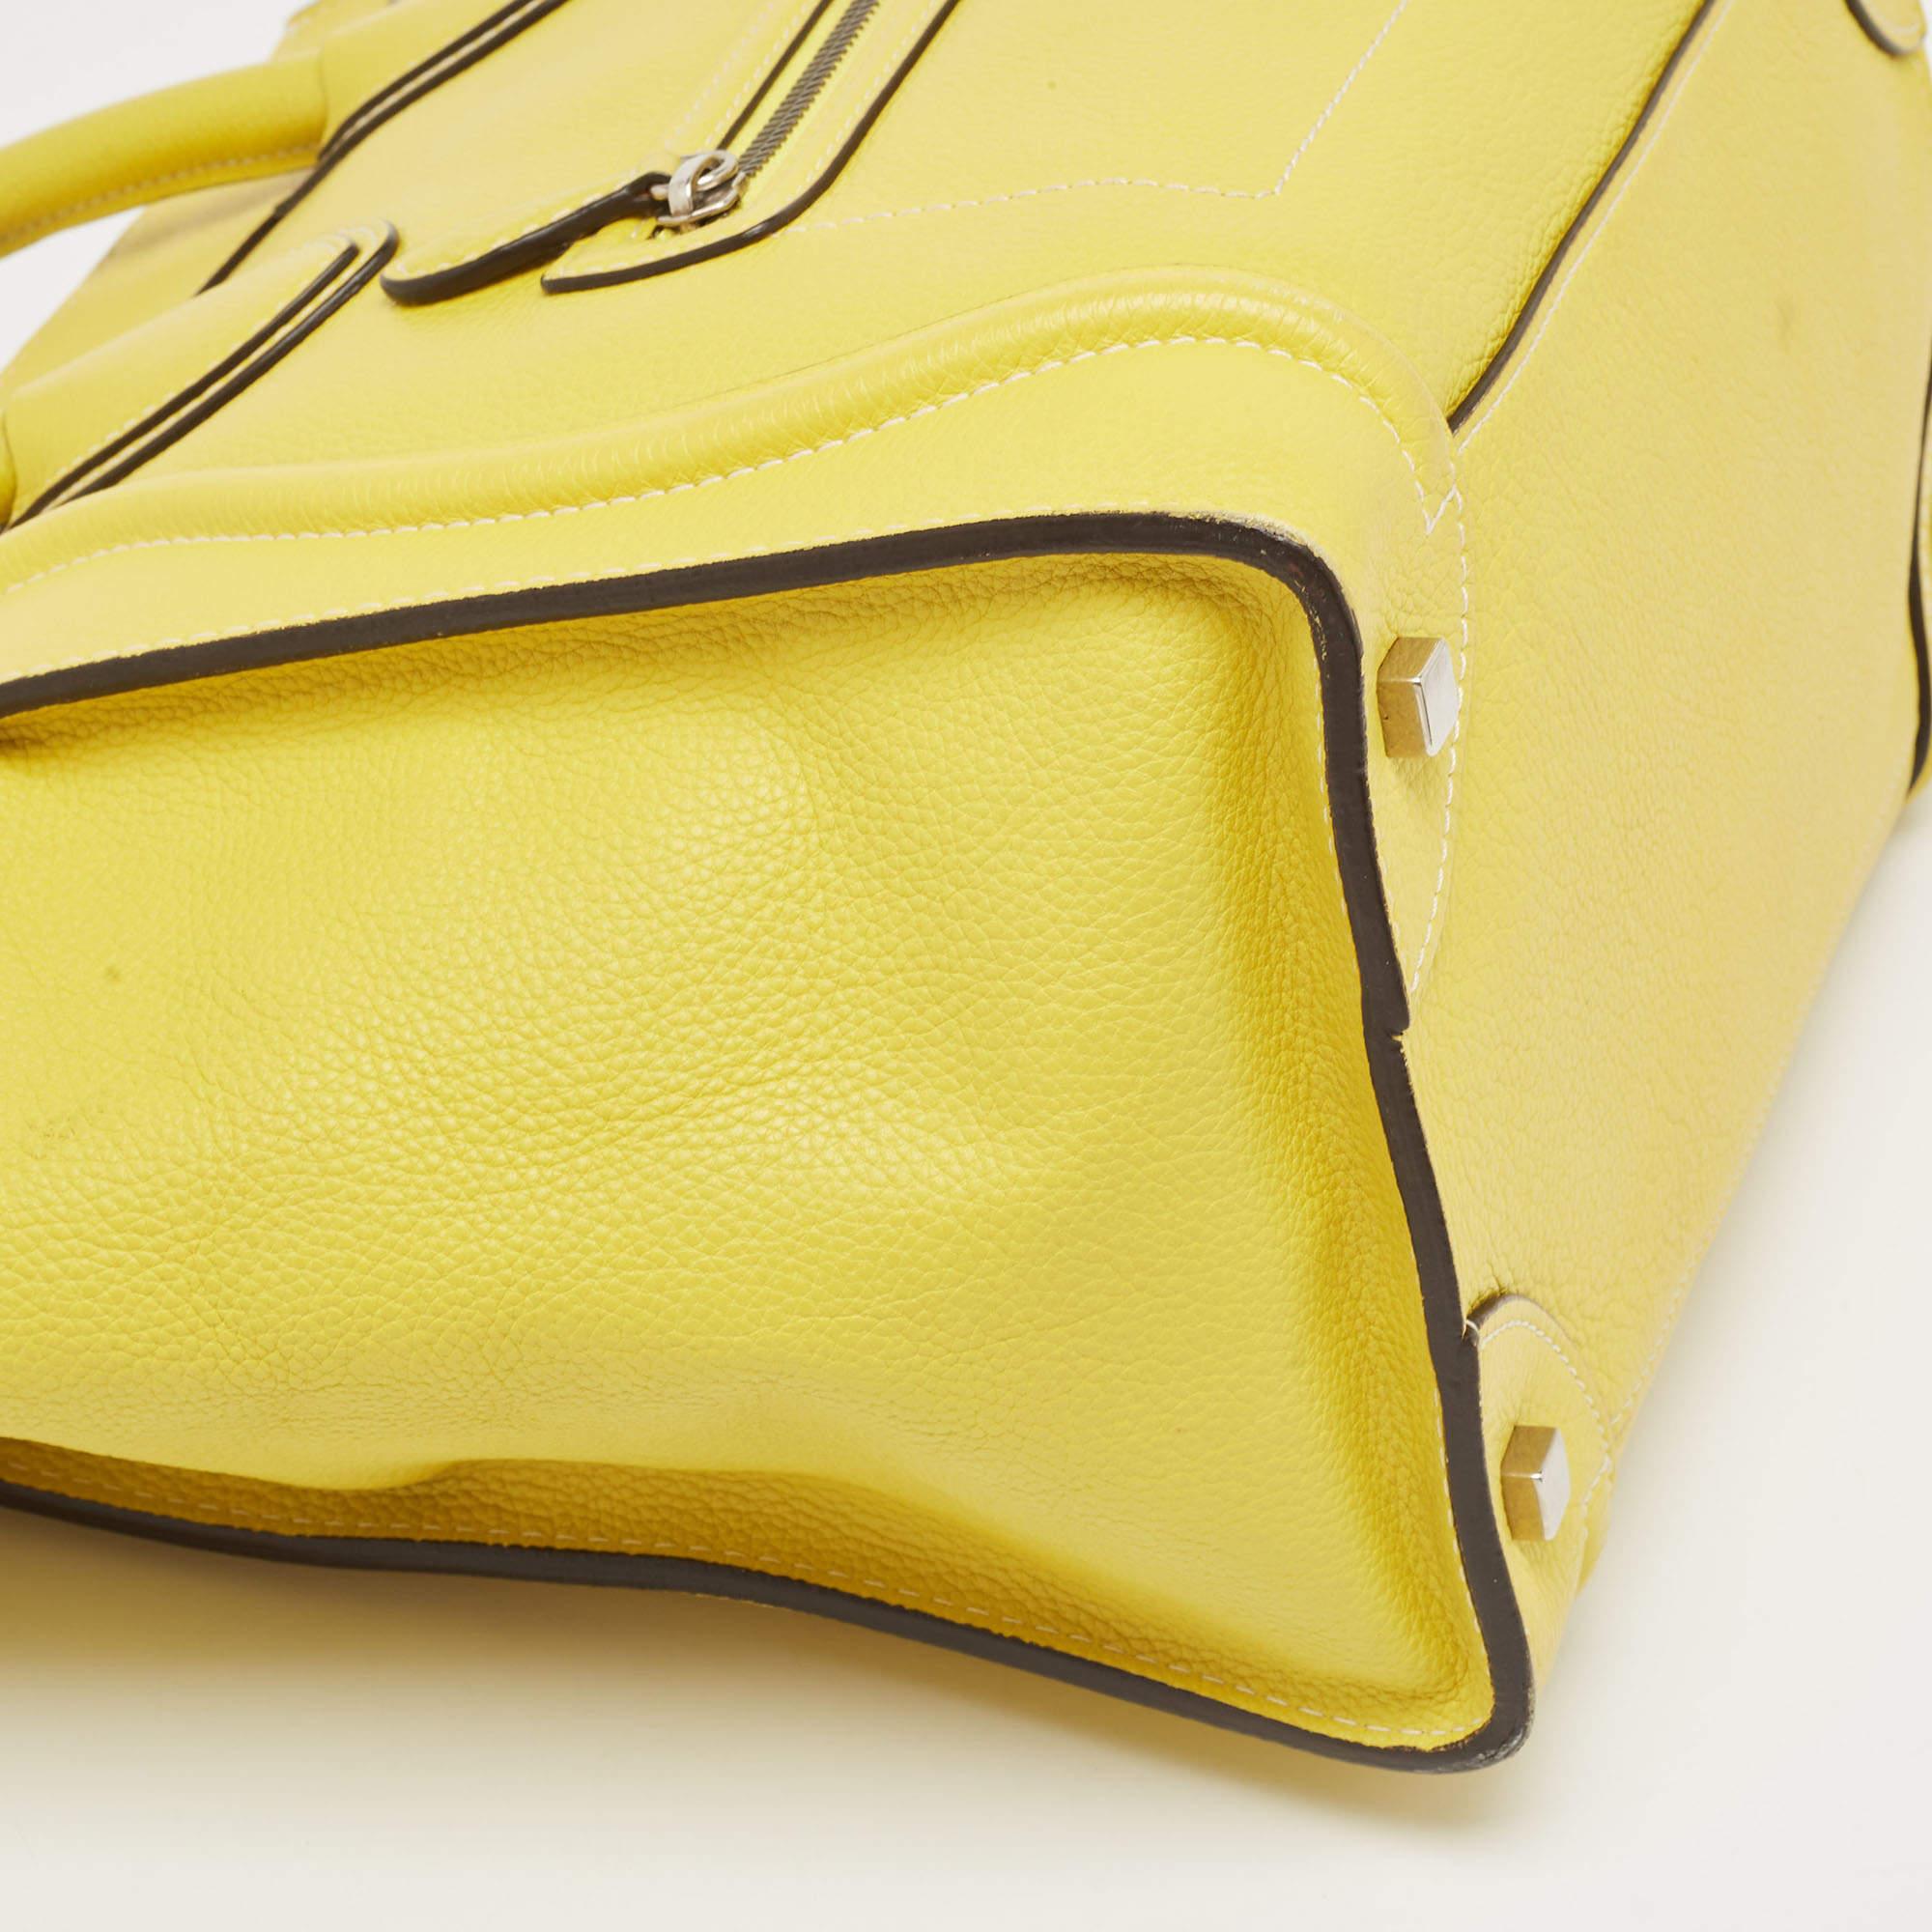 Celine Yellow Leather Mini Luggage Tote 8